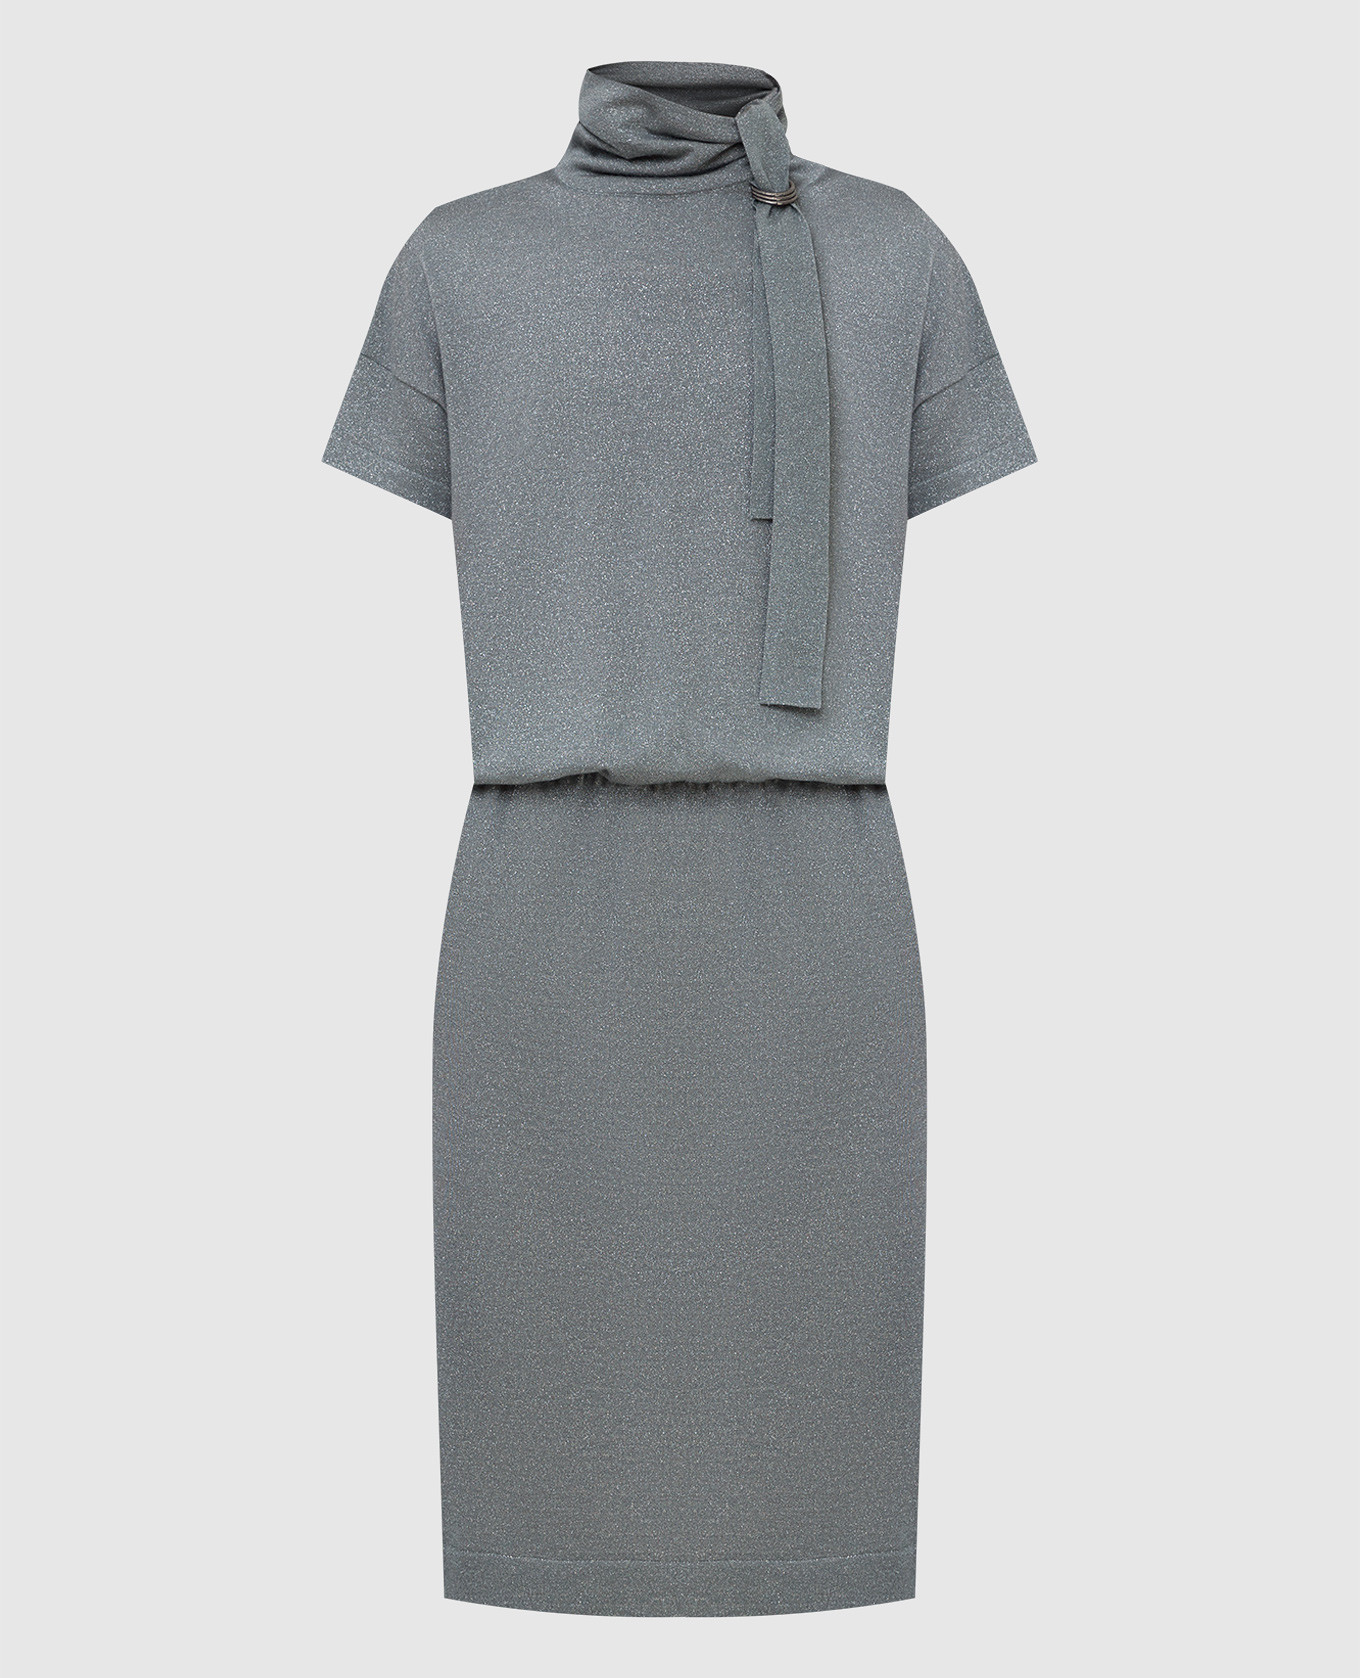 Gray dress with lurex